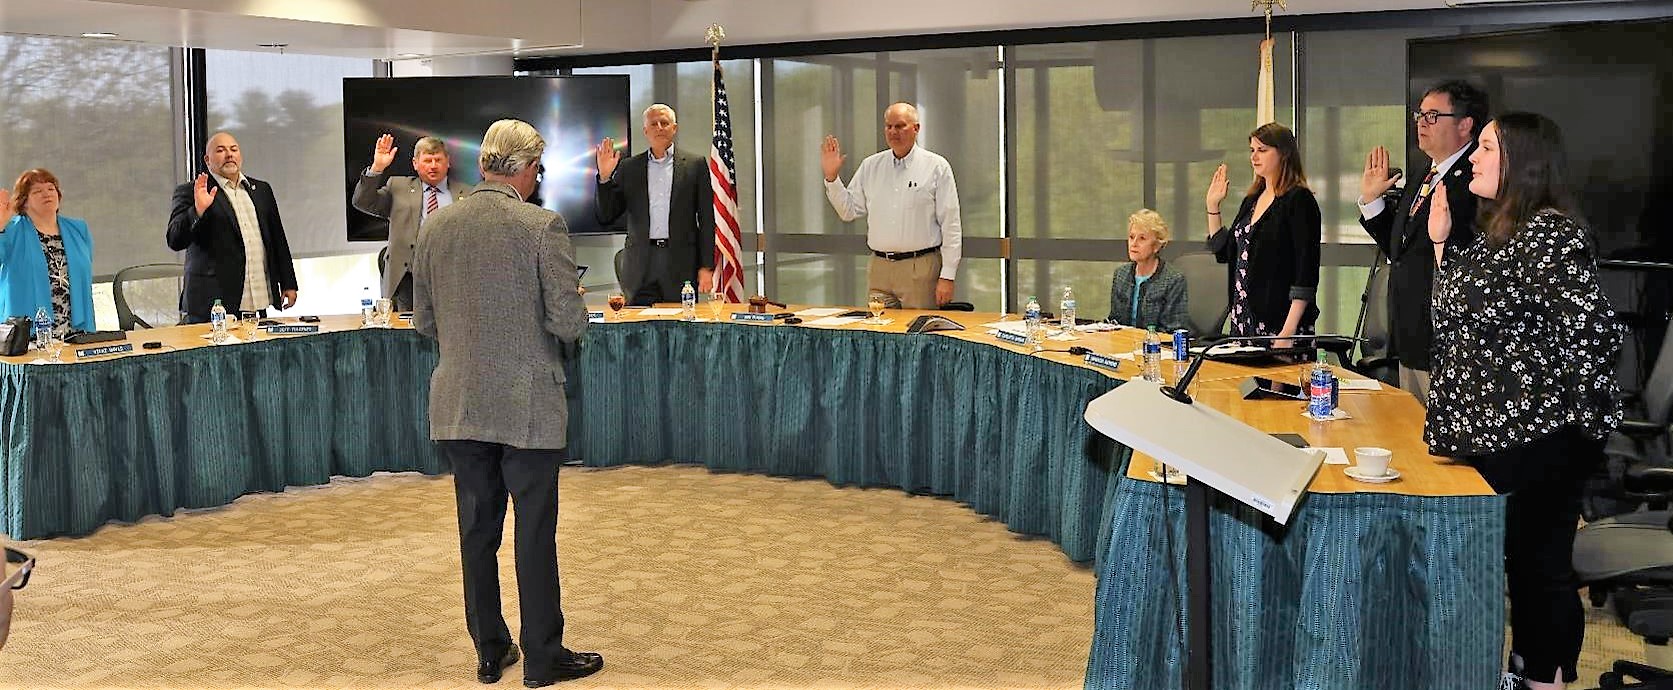 Board of Trustees being sworn in